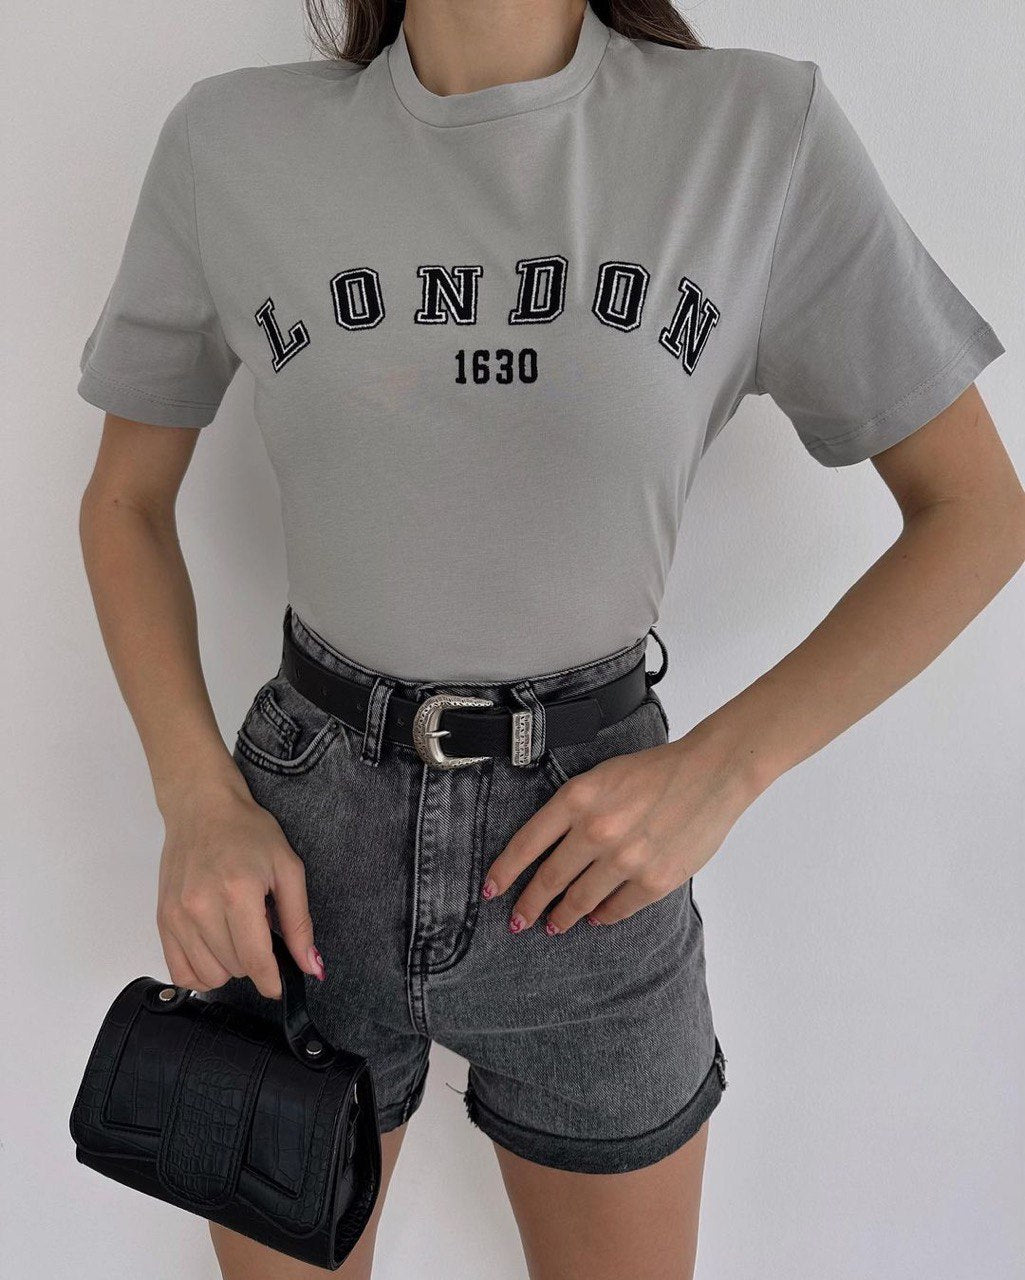 Gray London 1630 T-shirt